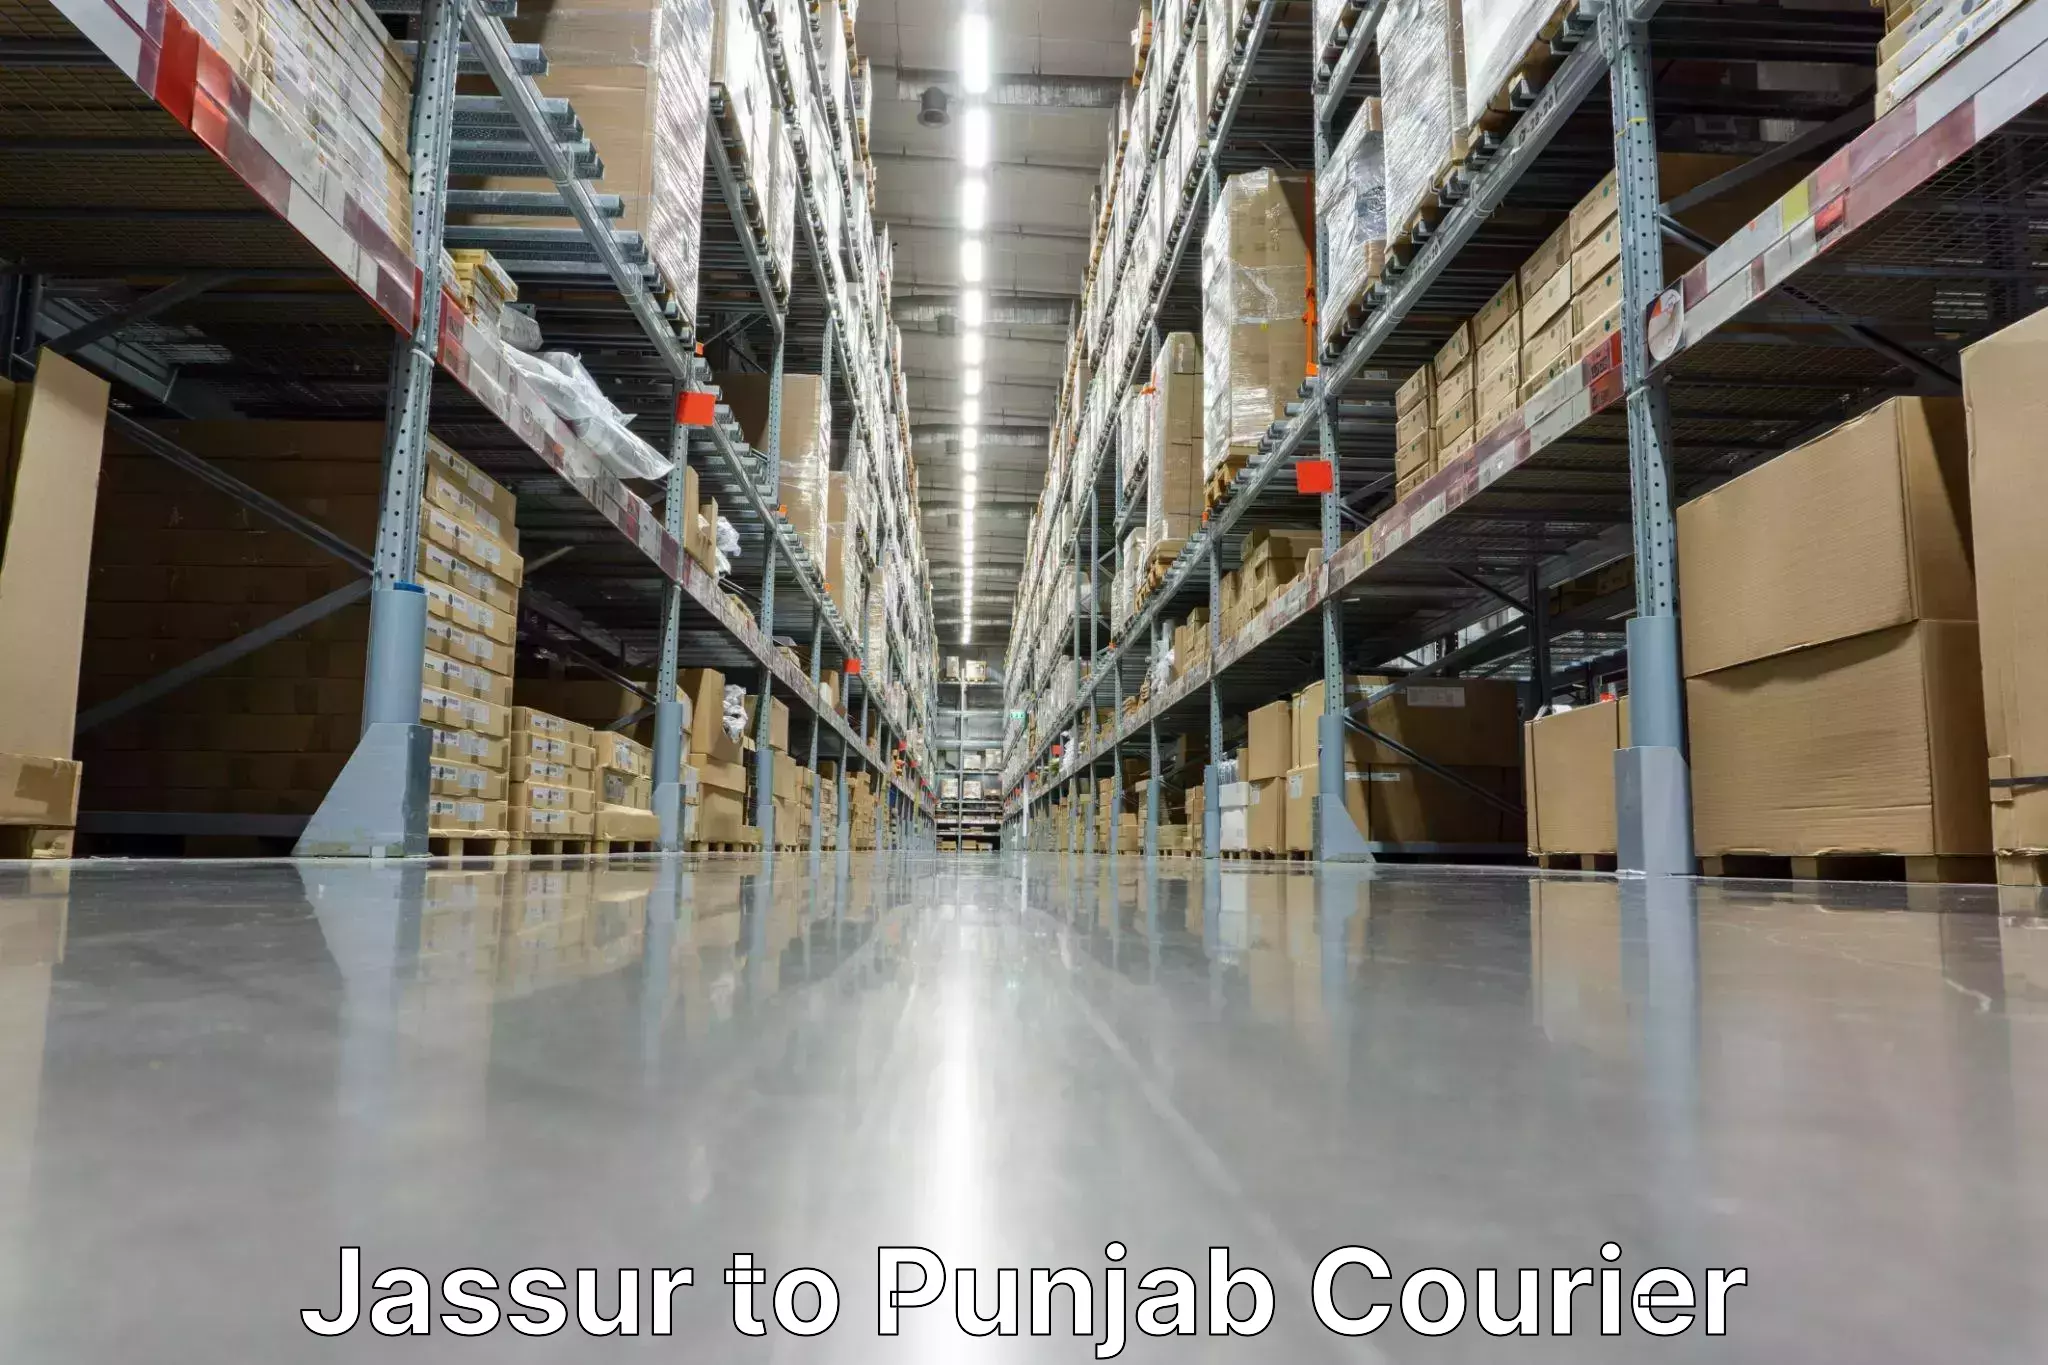 Express mail solutions Jassur to Punjab